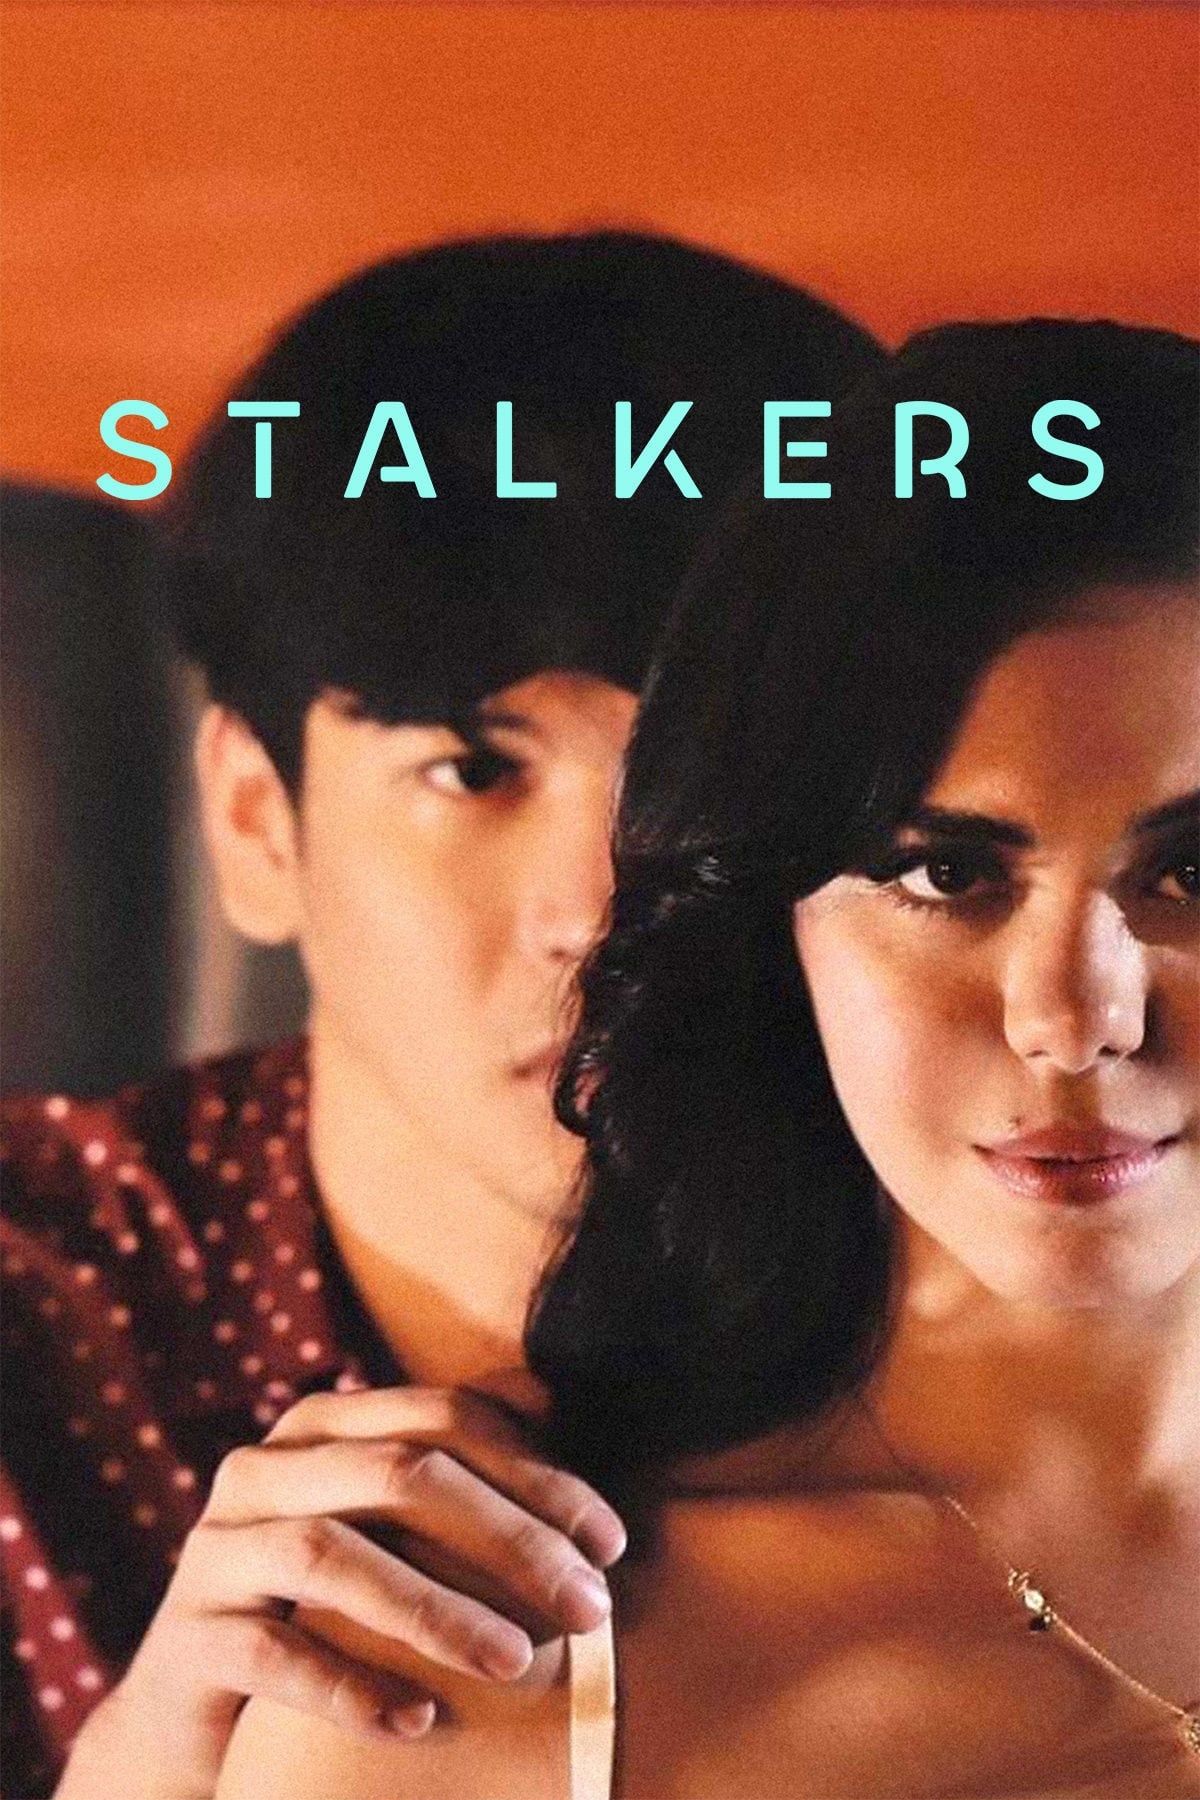 [18+] Stalkers (2023) S01E04 VMax Web Series HDRip Full Movie